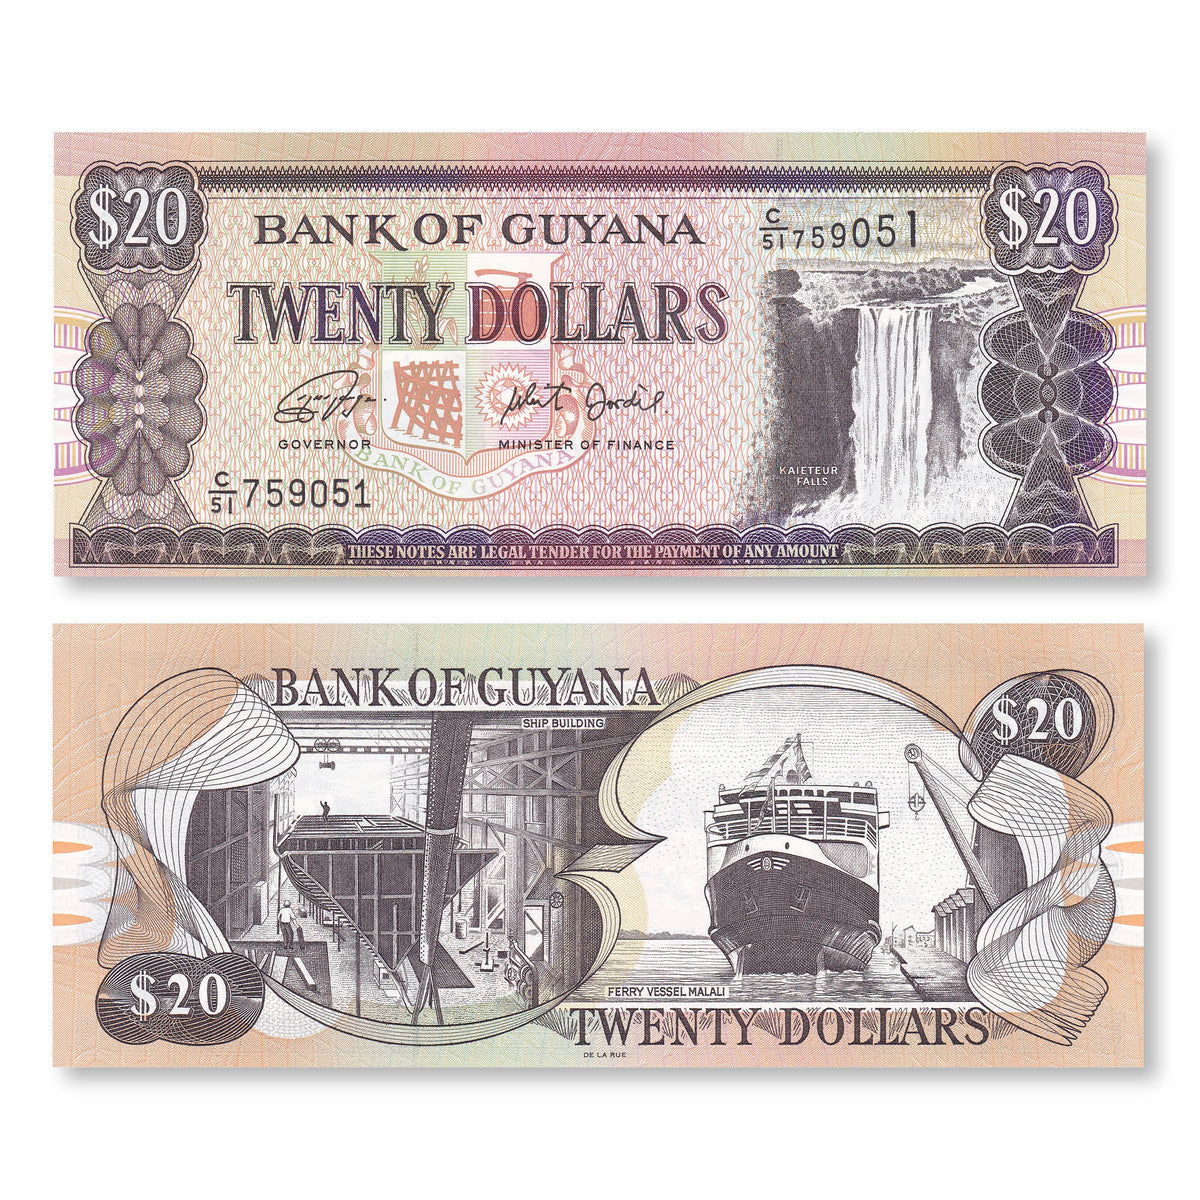 Guyana 20 Dollars, 2017, B108h2, P30f, UNC - Robert's World Money - World Banknotes